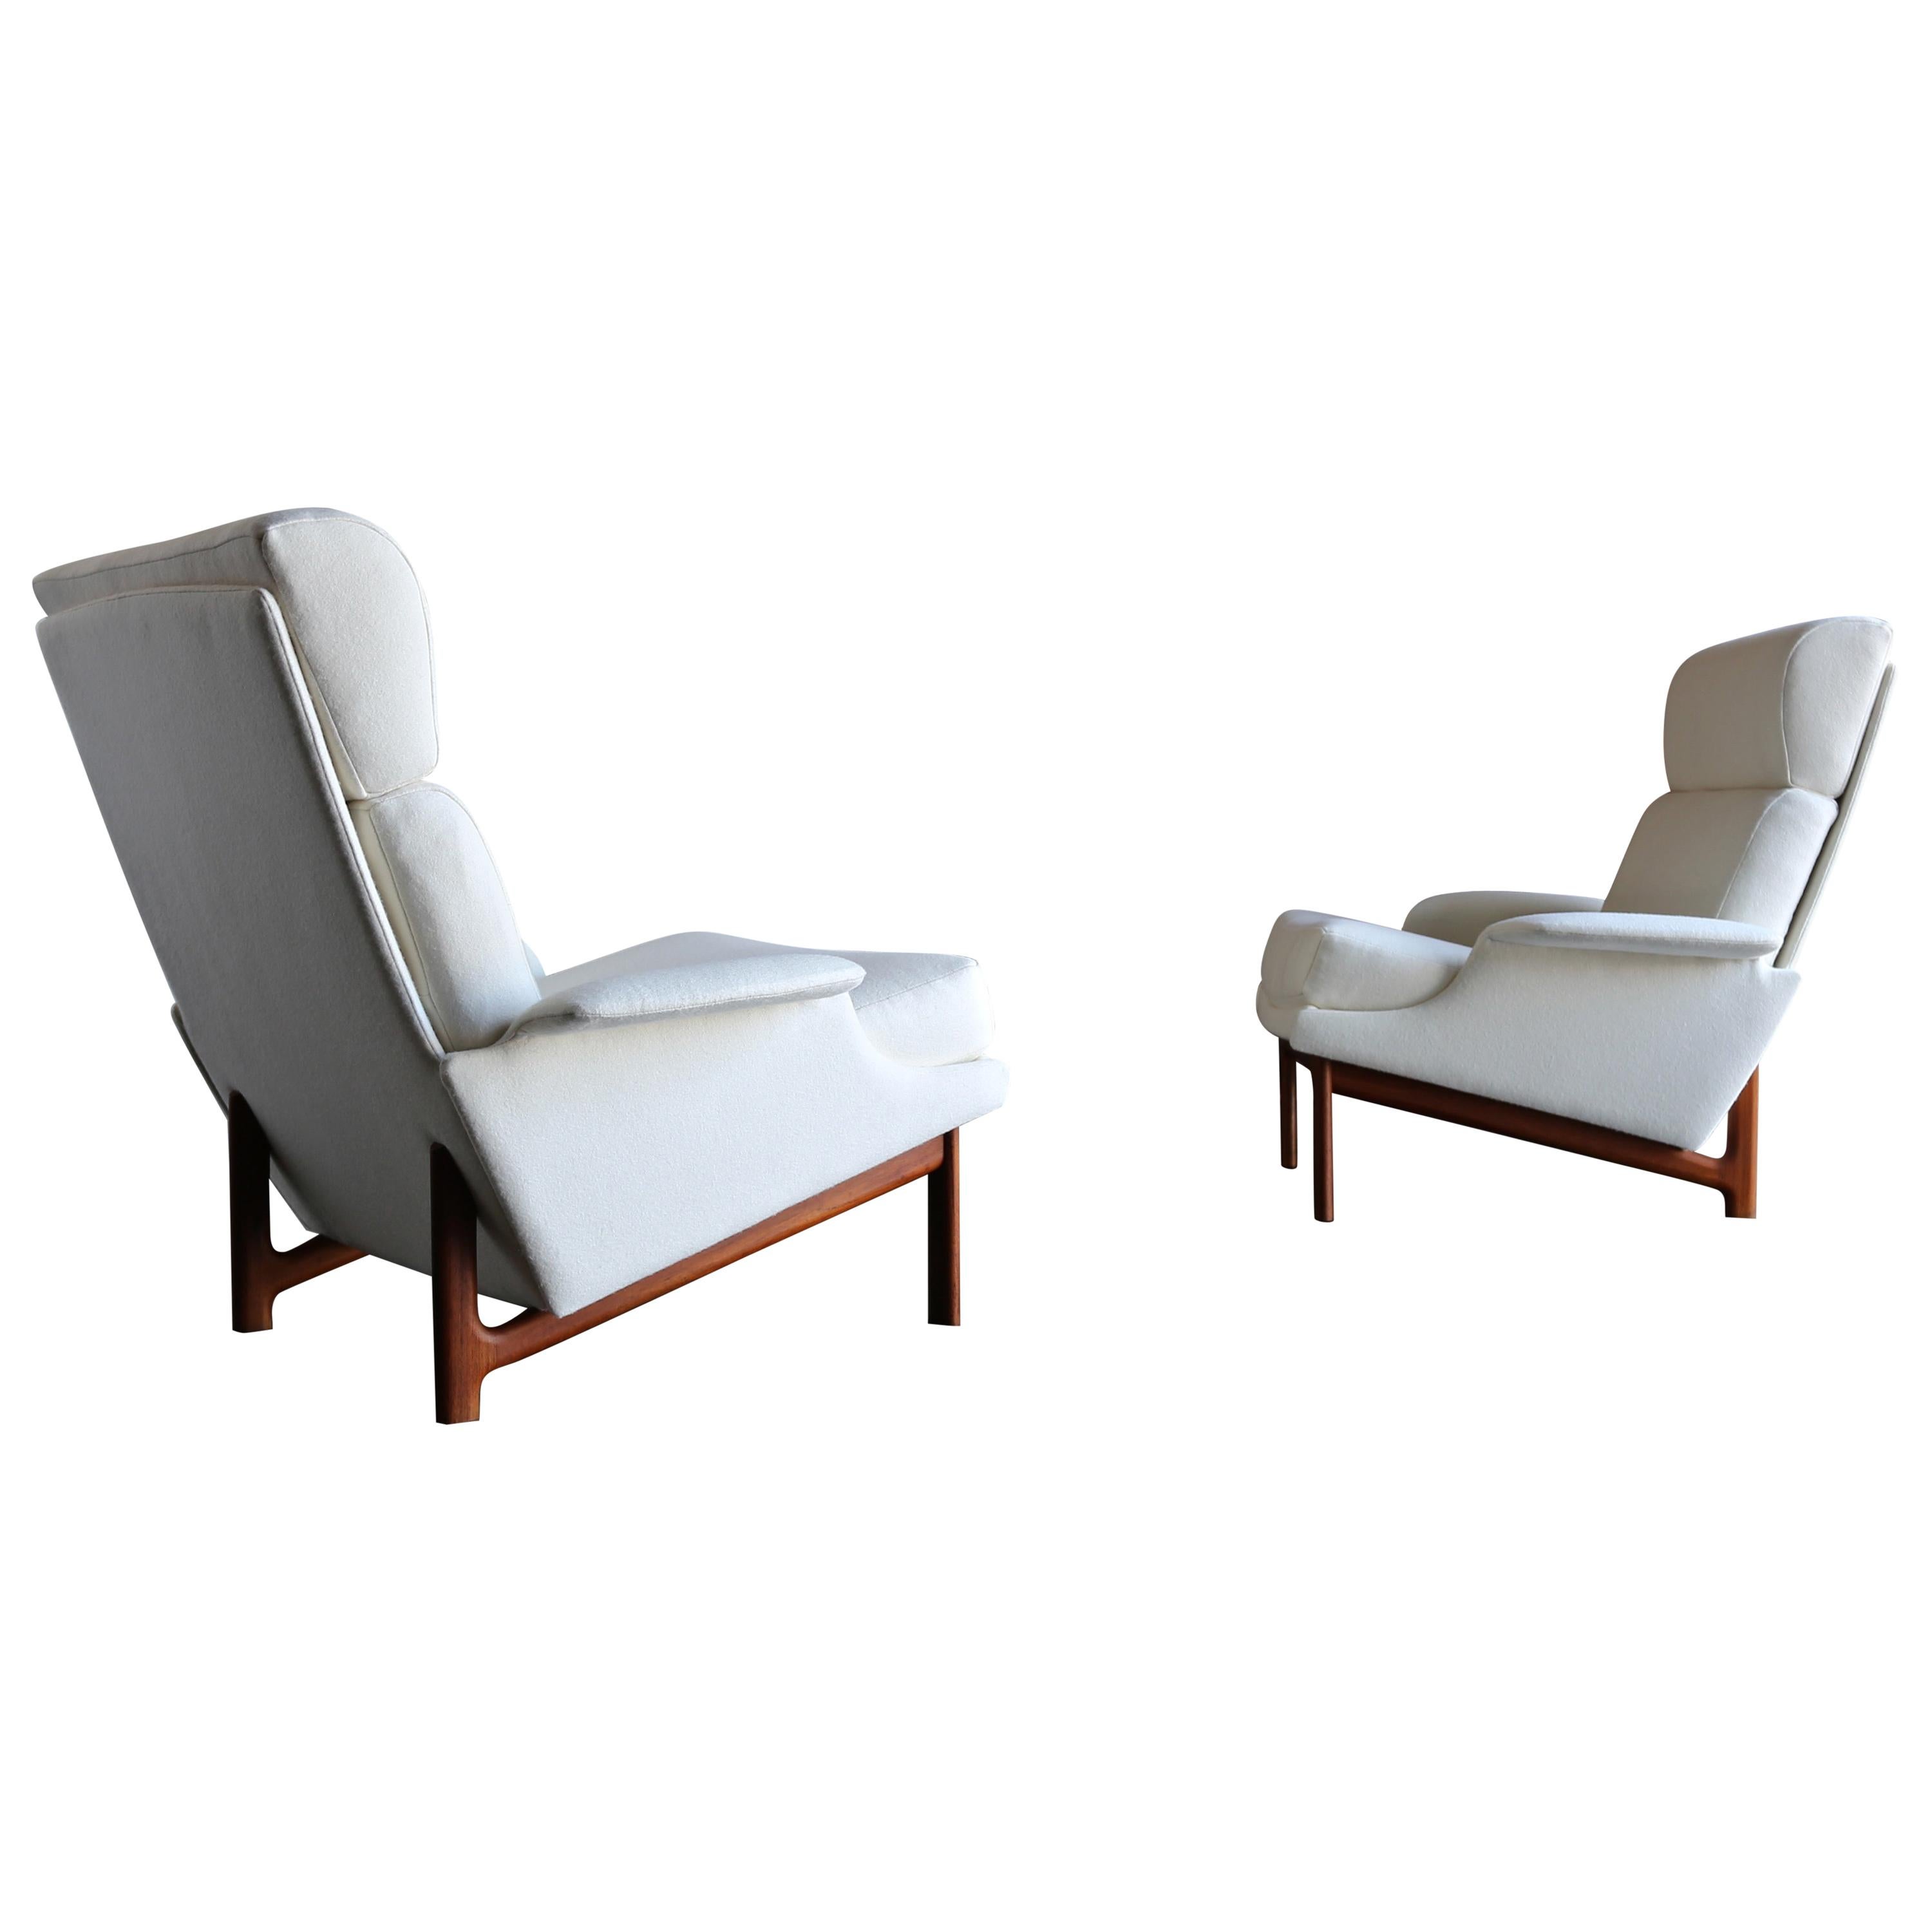 Ib Kofod-Larsen "Adam" Lounge Chairs for Mogens Kold Møbelfabrik, circa 1960